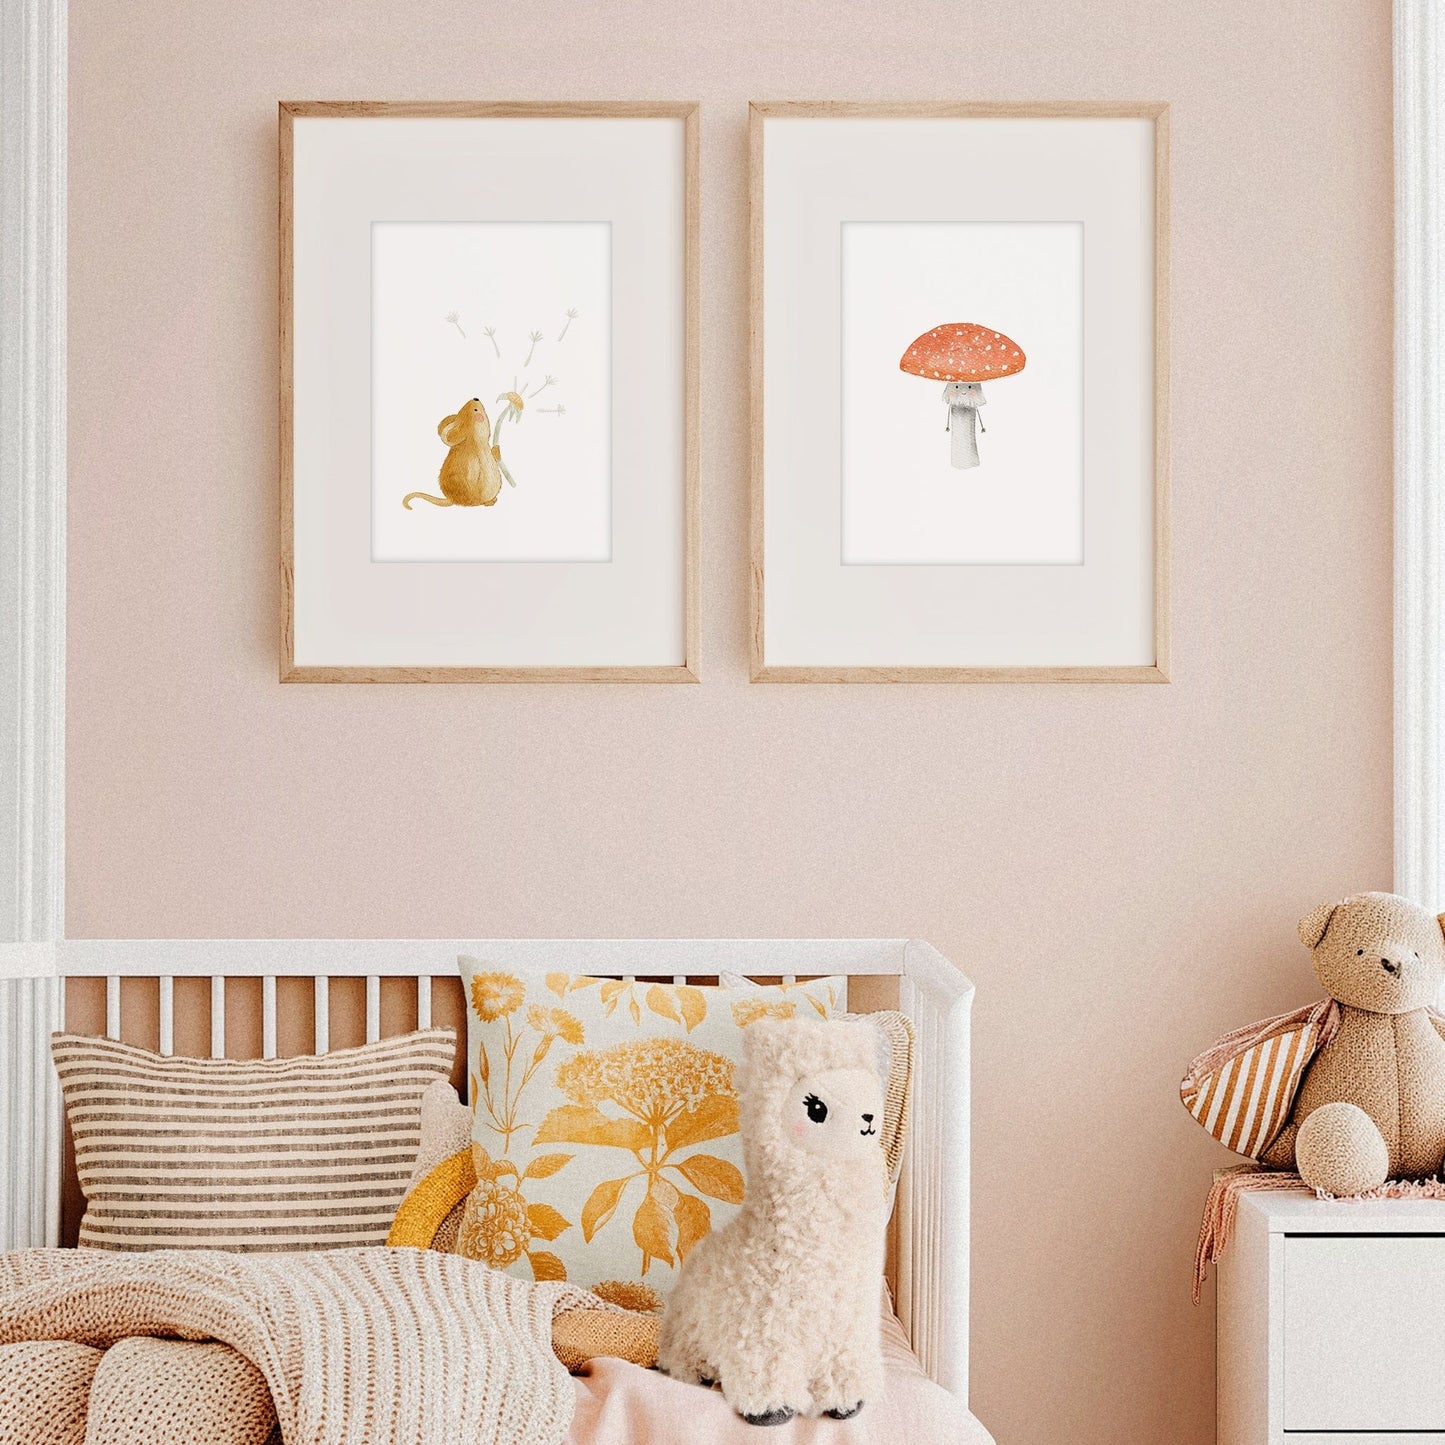 Poster 'Maus mit Pusteblume' | Kinderzimmer Deko | DIN A4 oder A5 Poster Kotenkram 